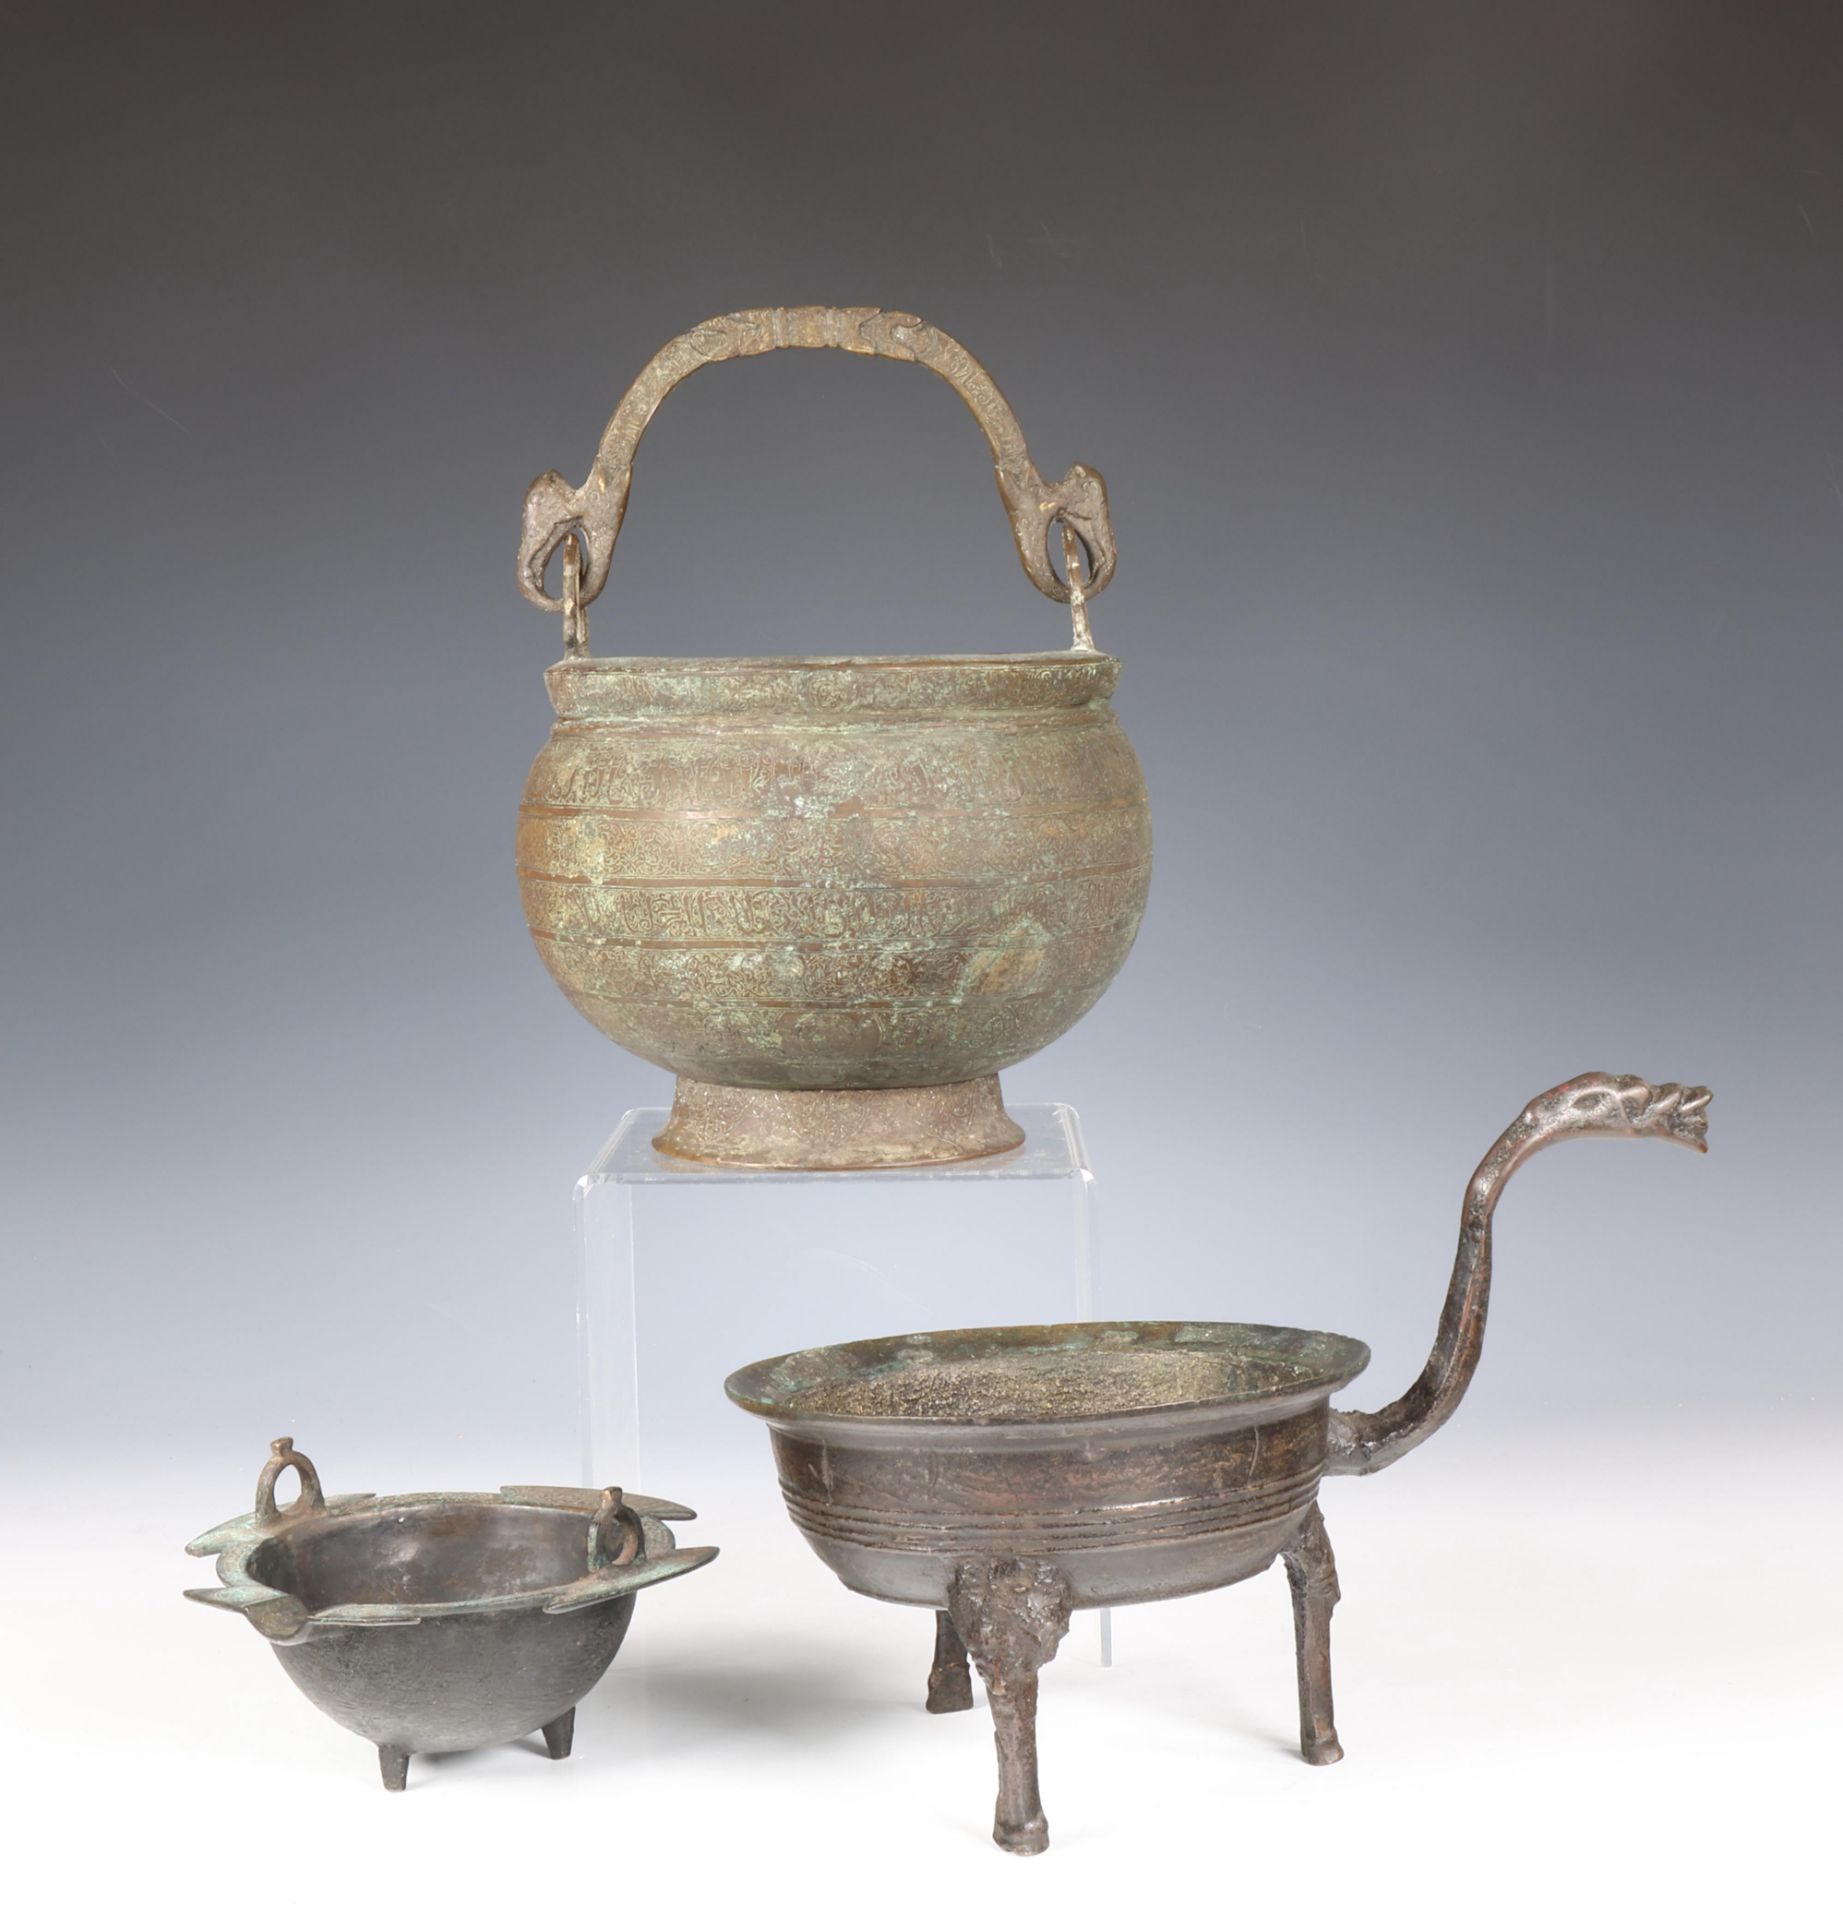 A Persian bronze tripot cauldron, Khorasan, 13th century or later.